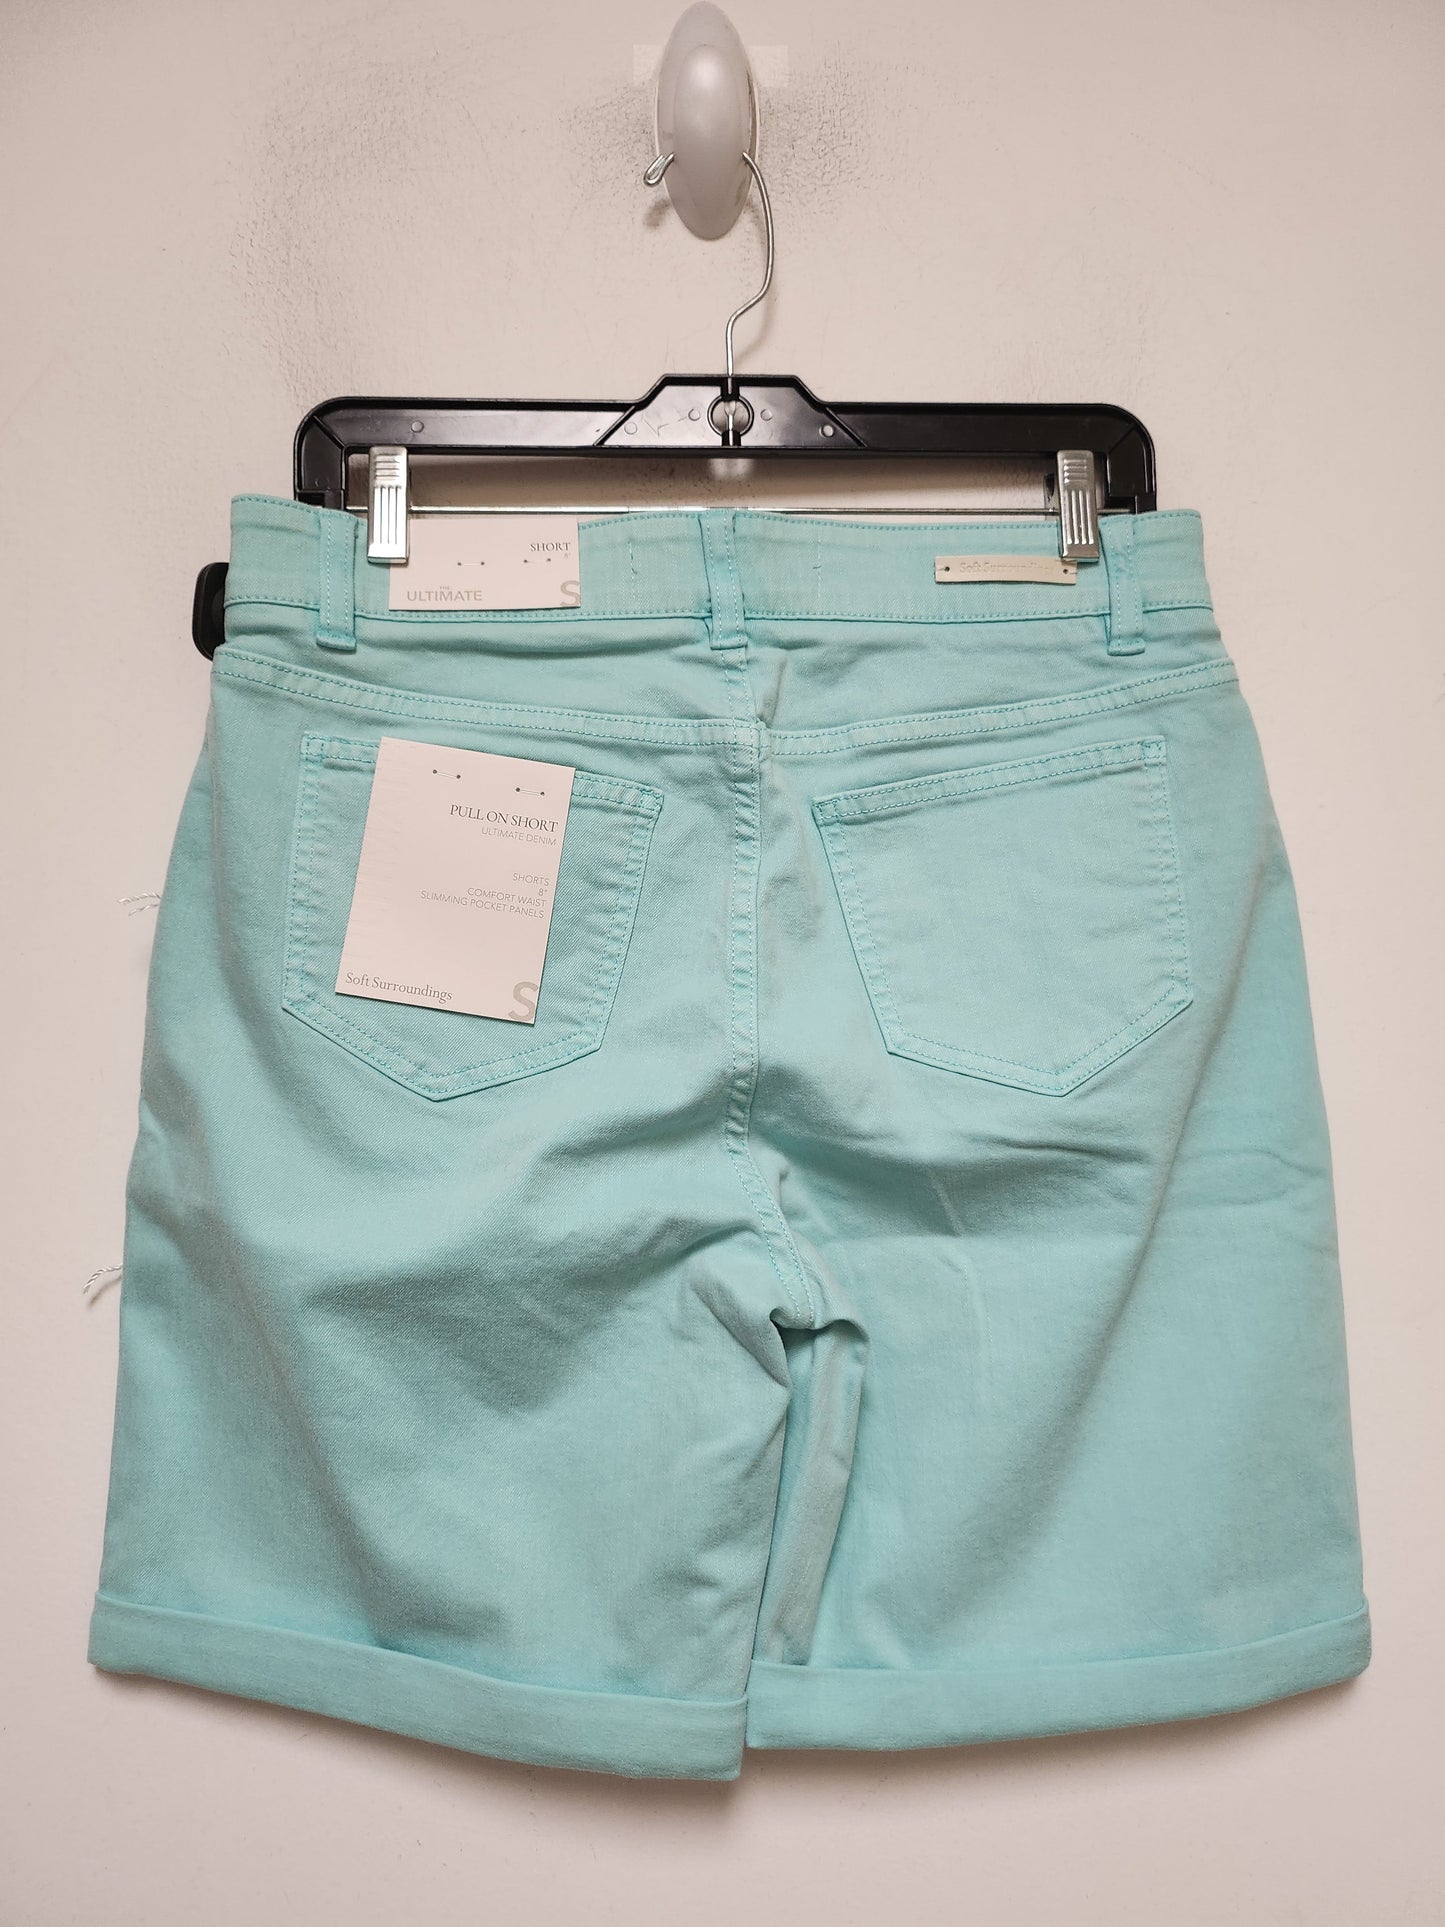 Green Denim Shorts Soft Surroundings, Size 6